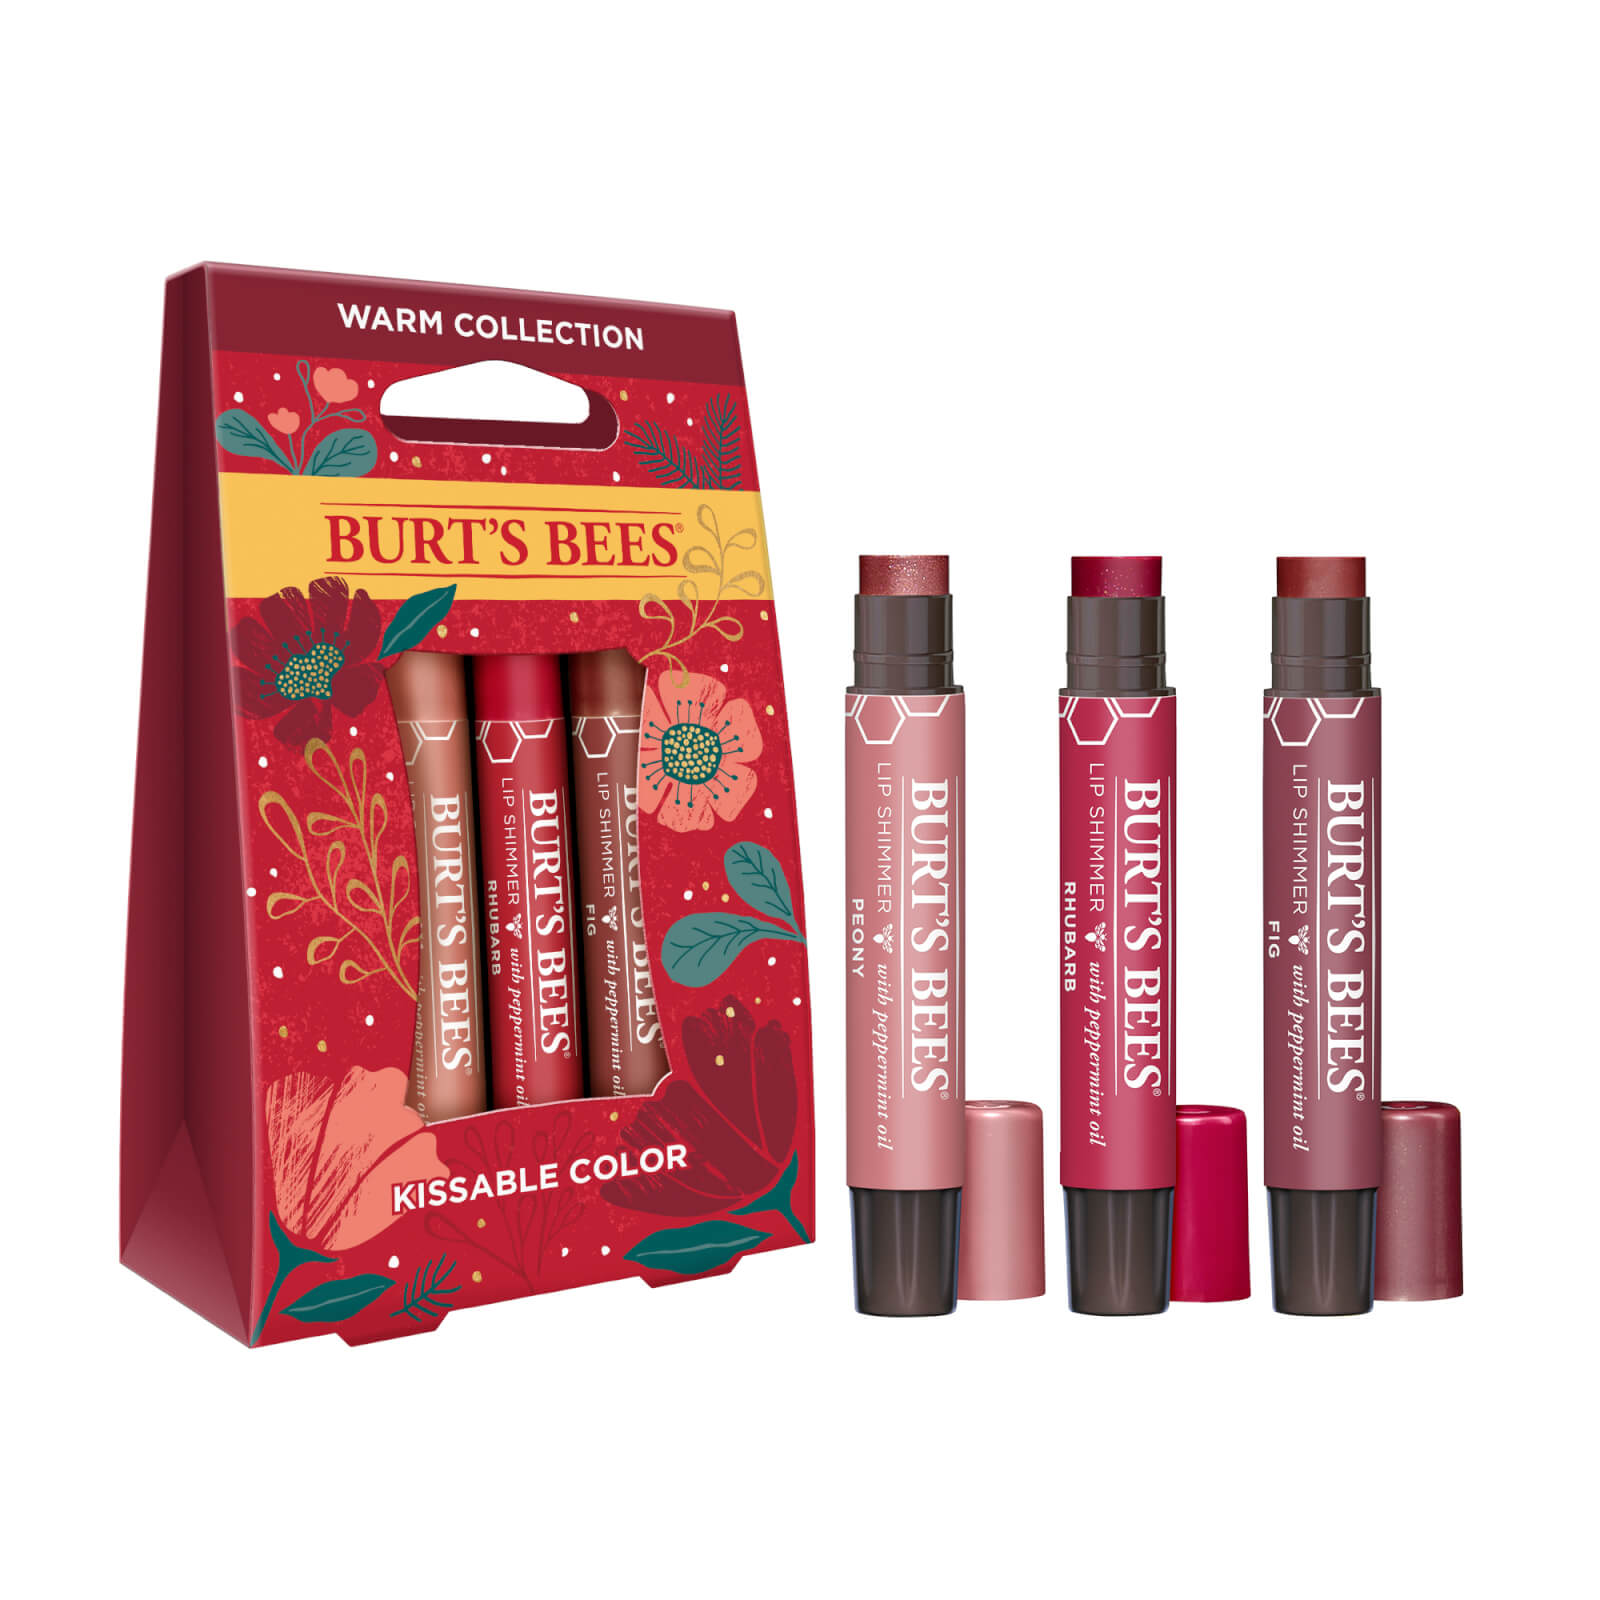 Burt's Bees Kissable Colour Holiday Gift Set (Worth £17.97)